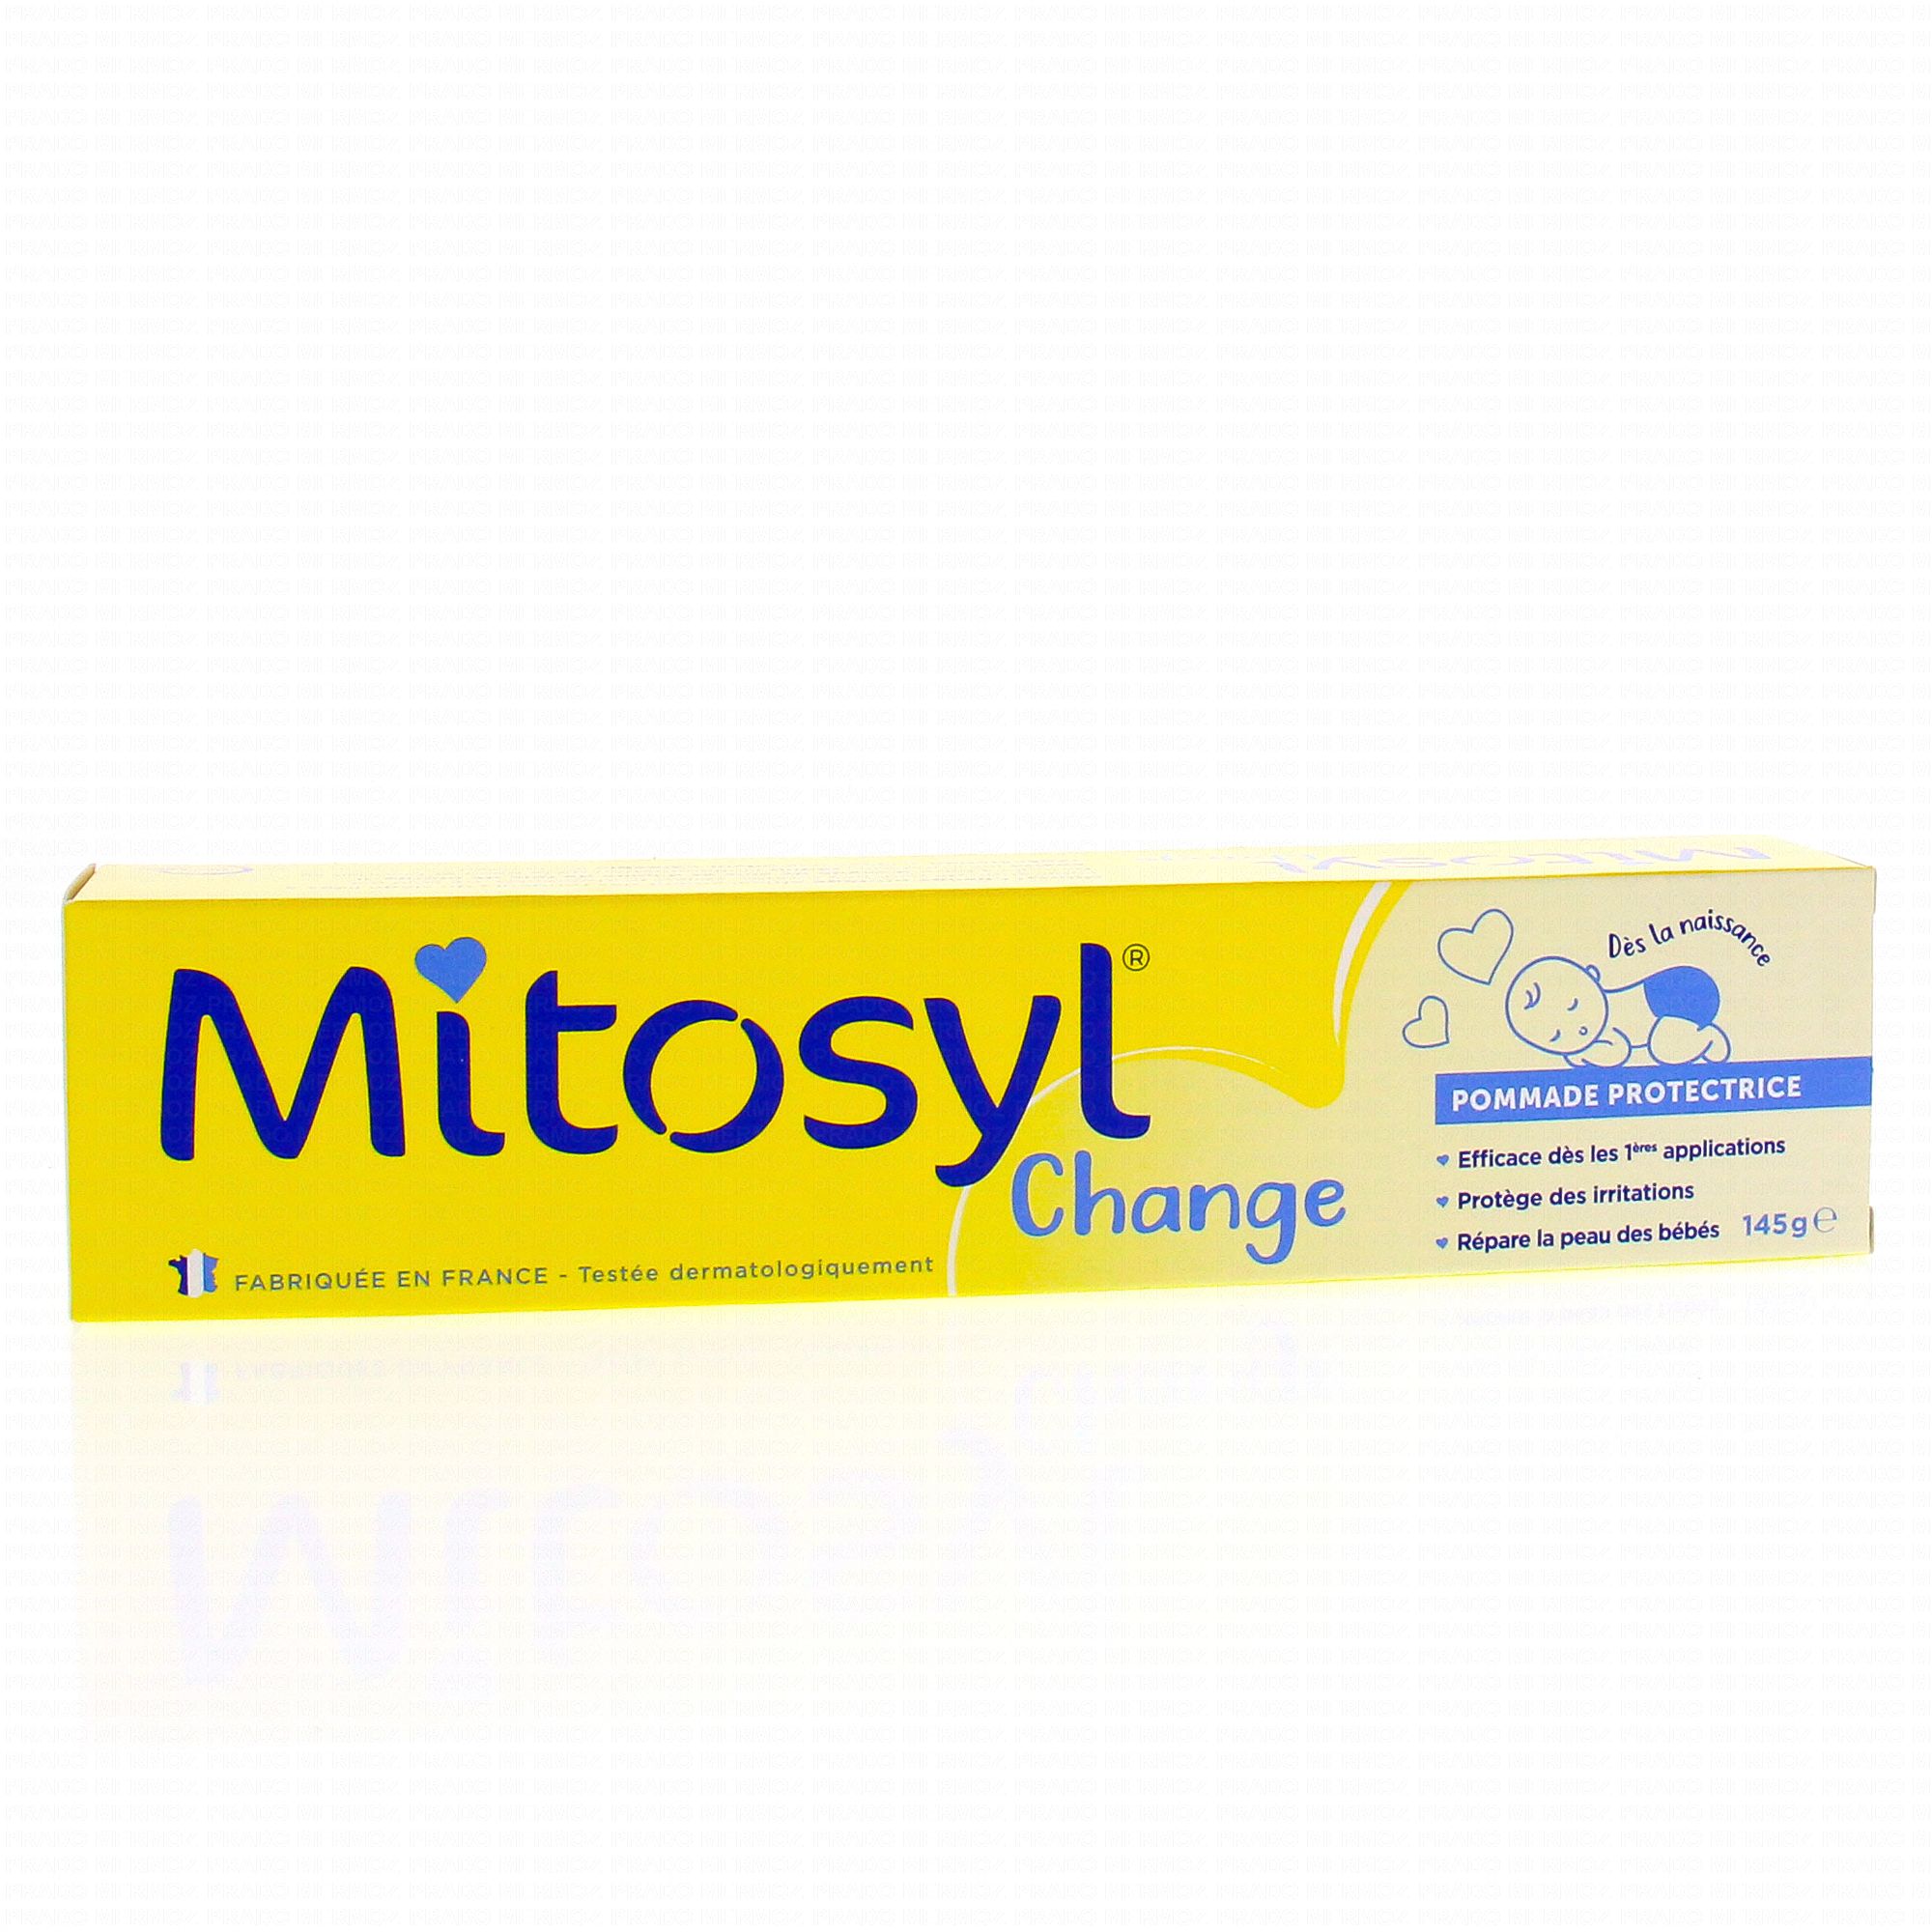 MITOSYL Change pommade protectrice - Parapharmacie Prado Mermoz